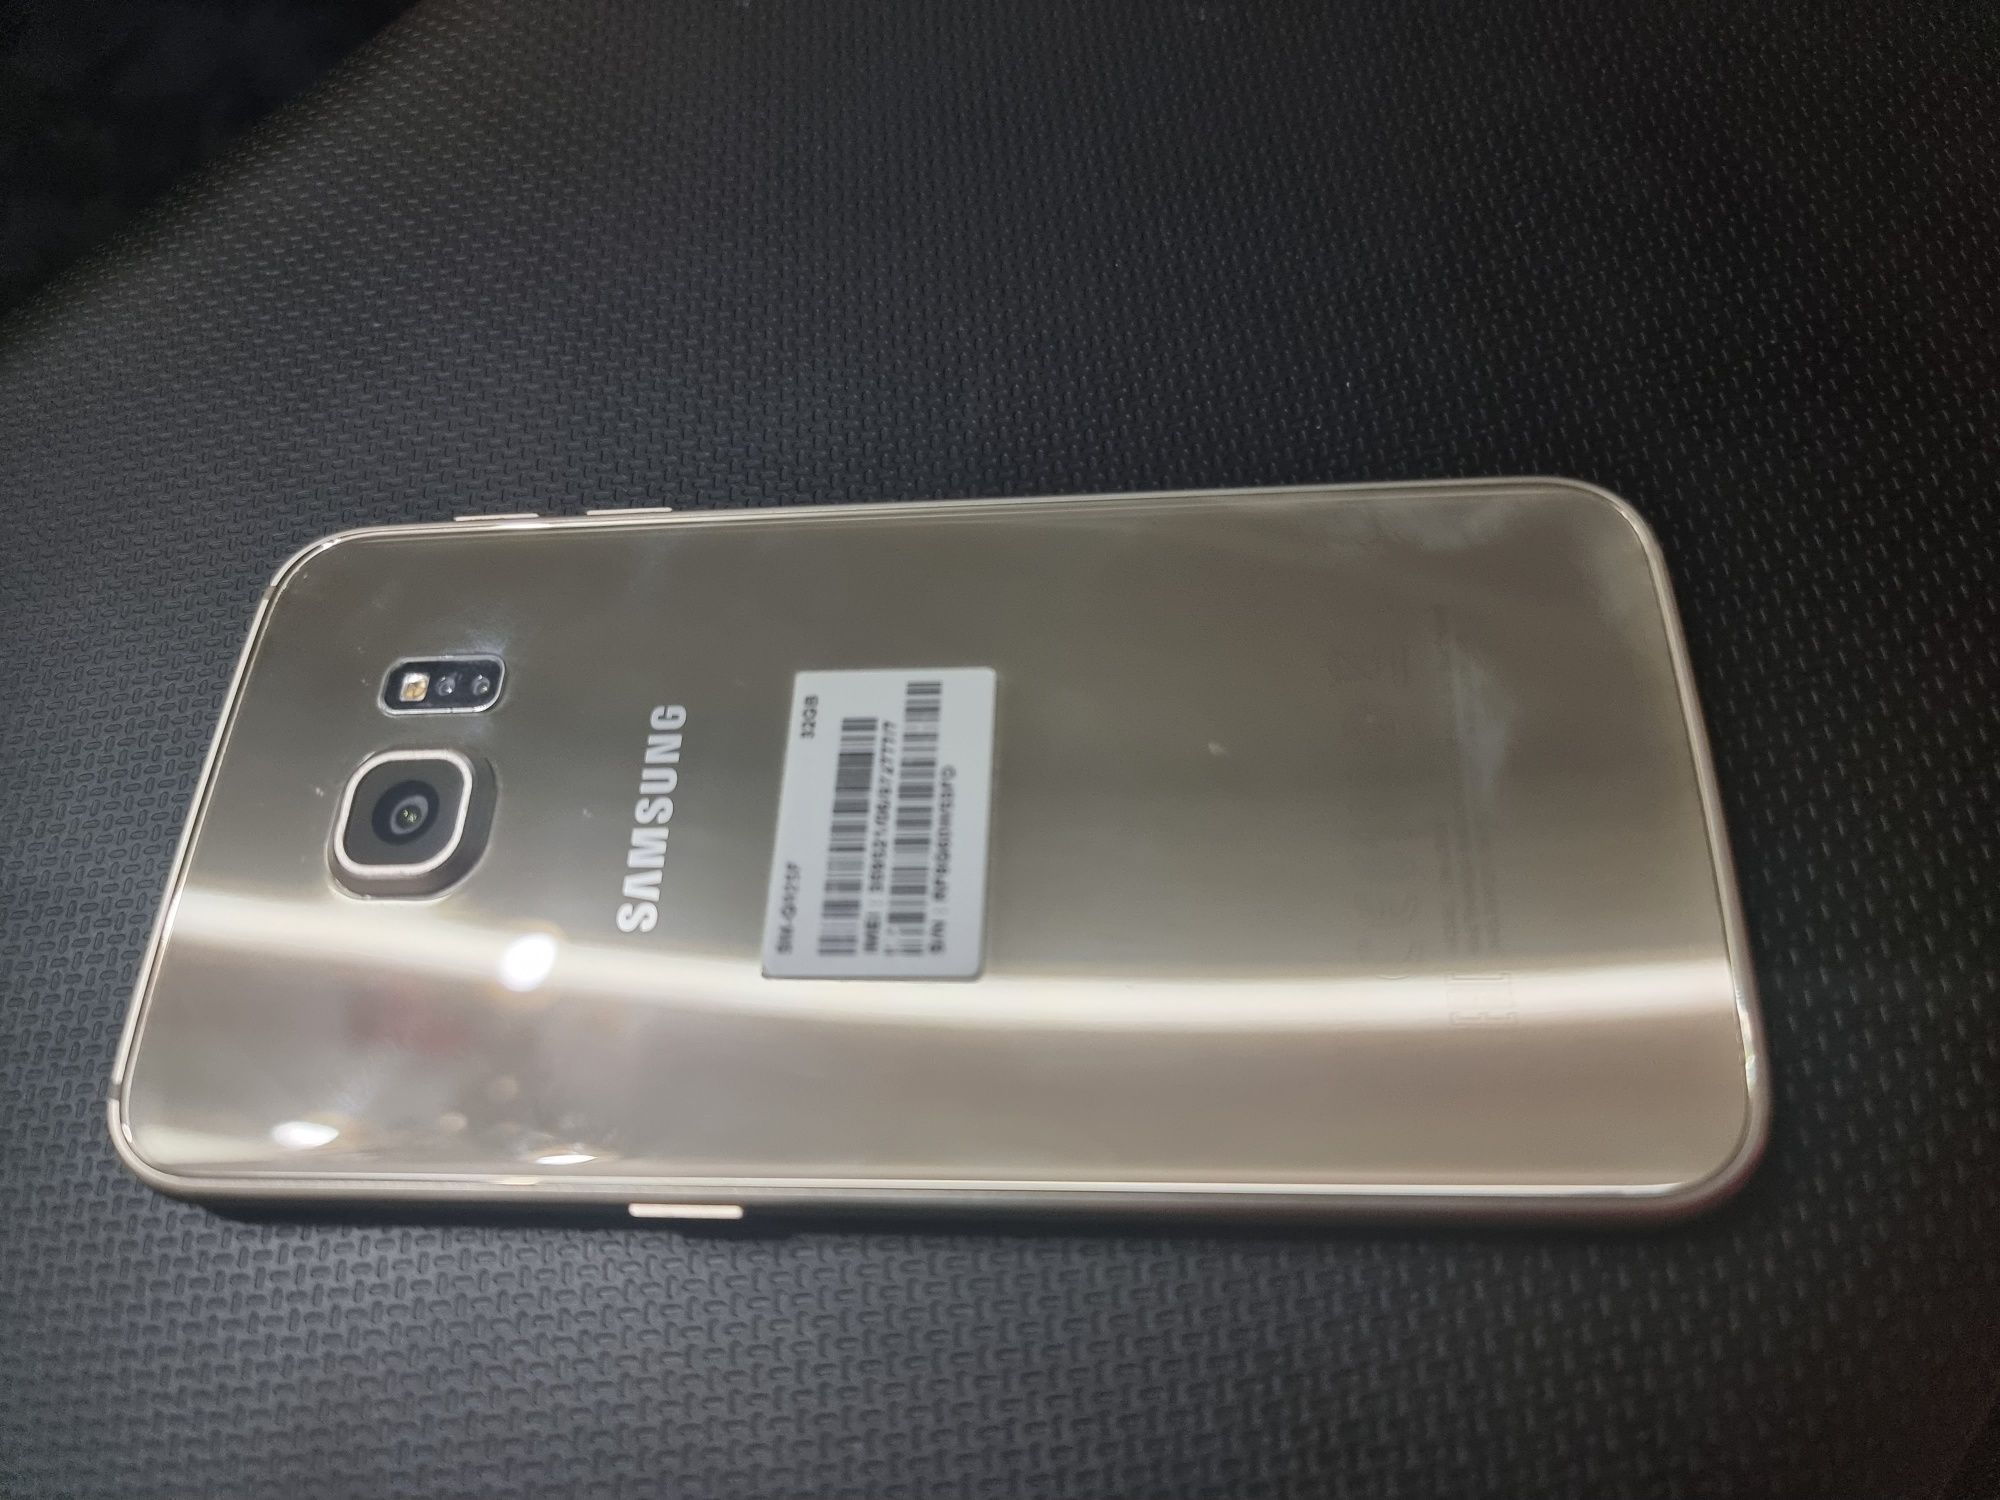 Samsung Galaxy S6 edge 32GB Gold